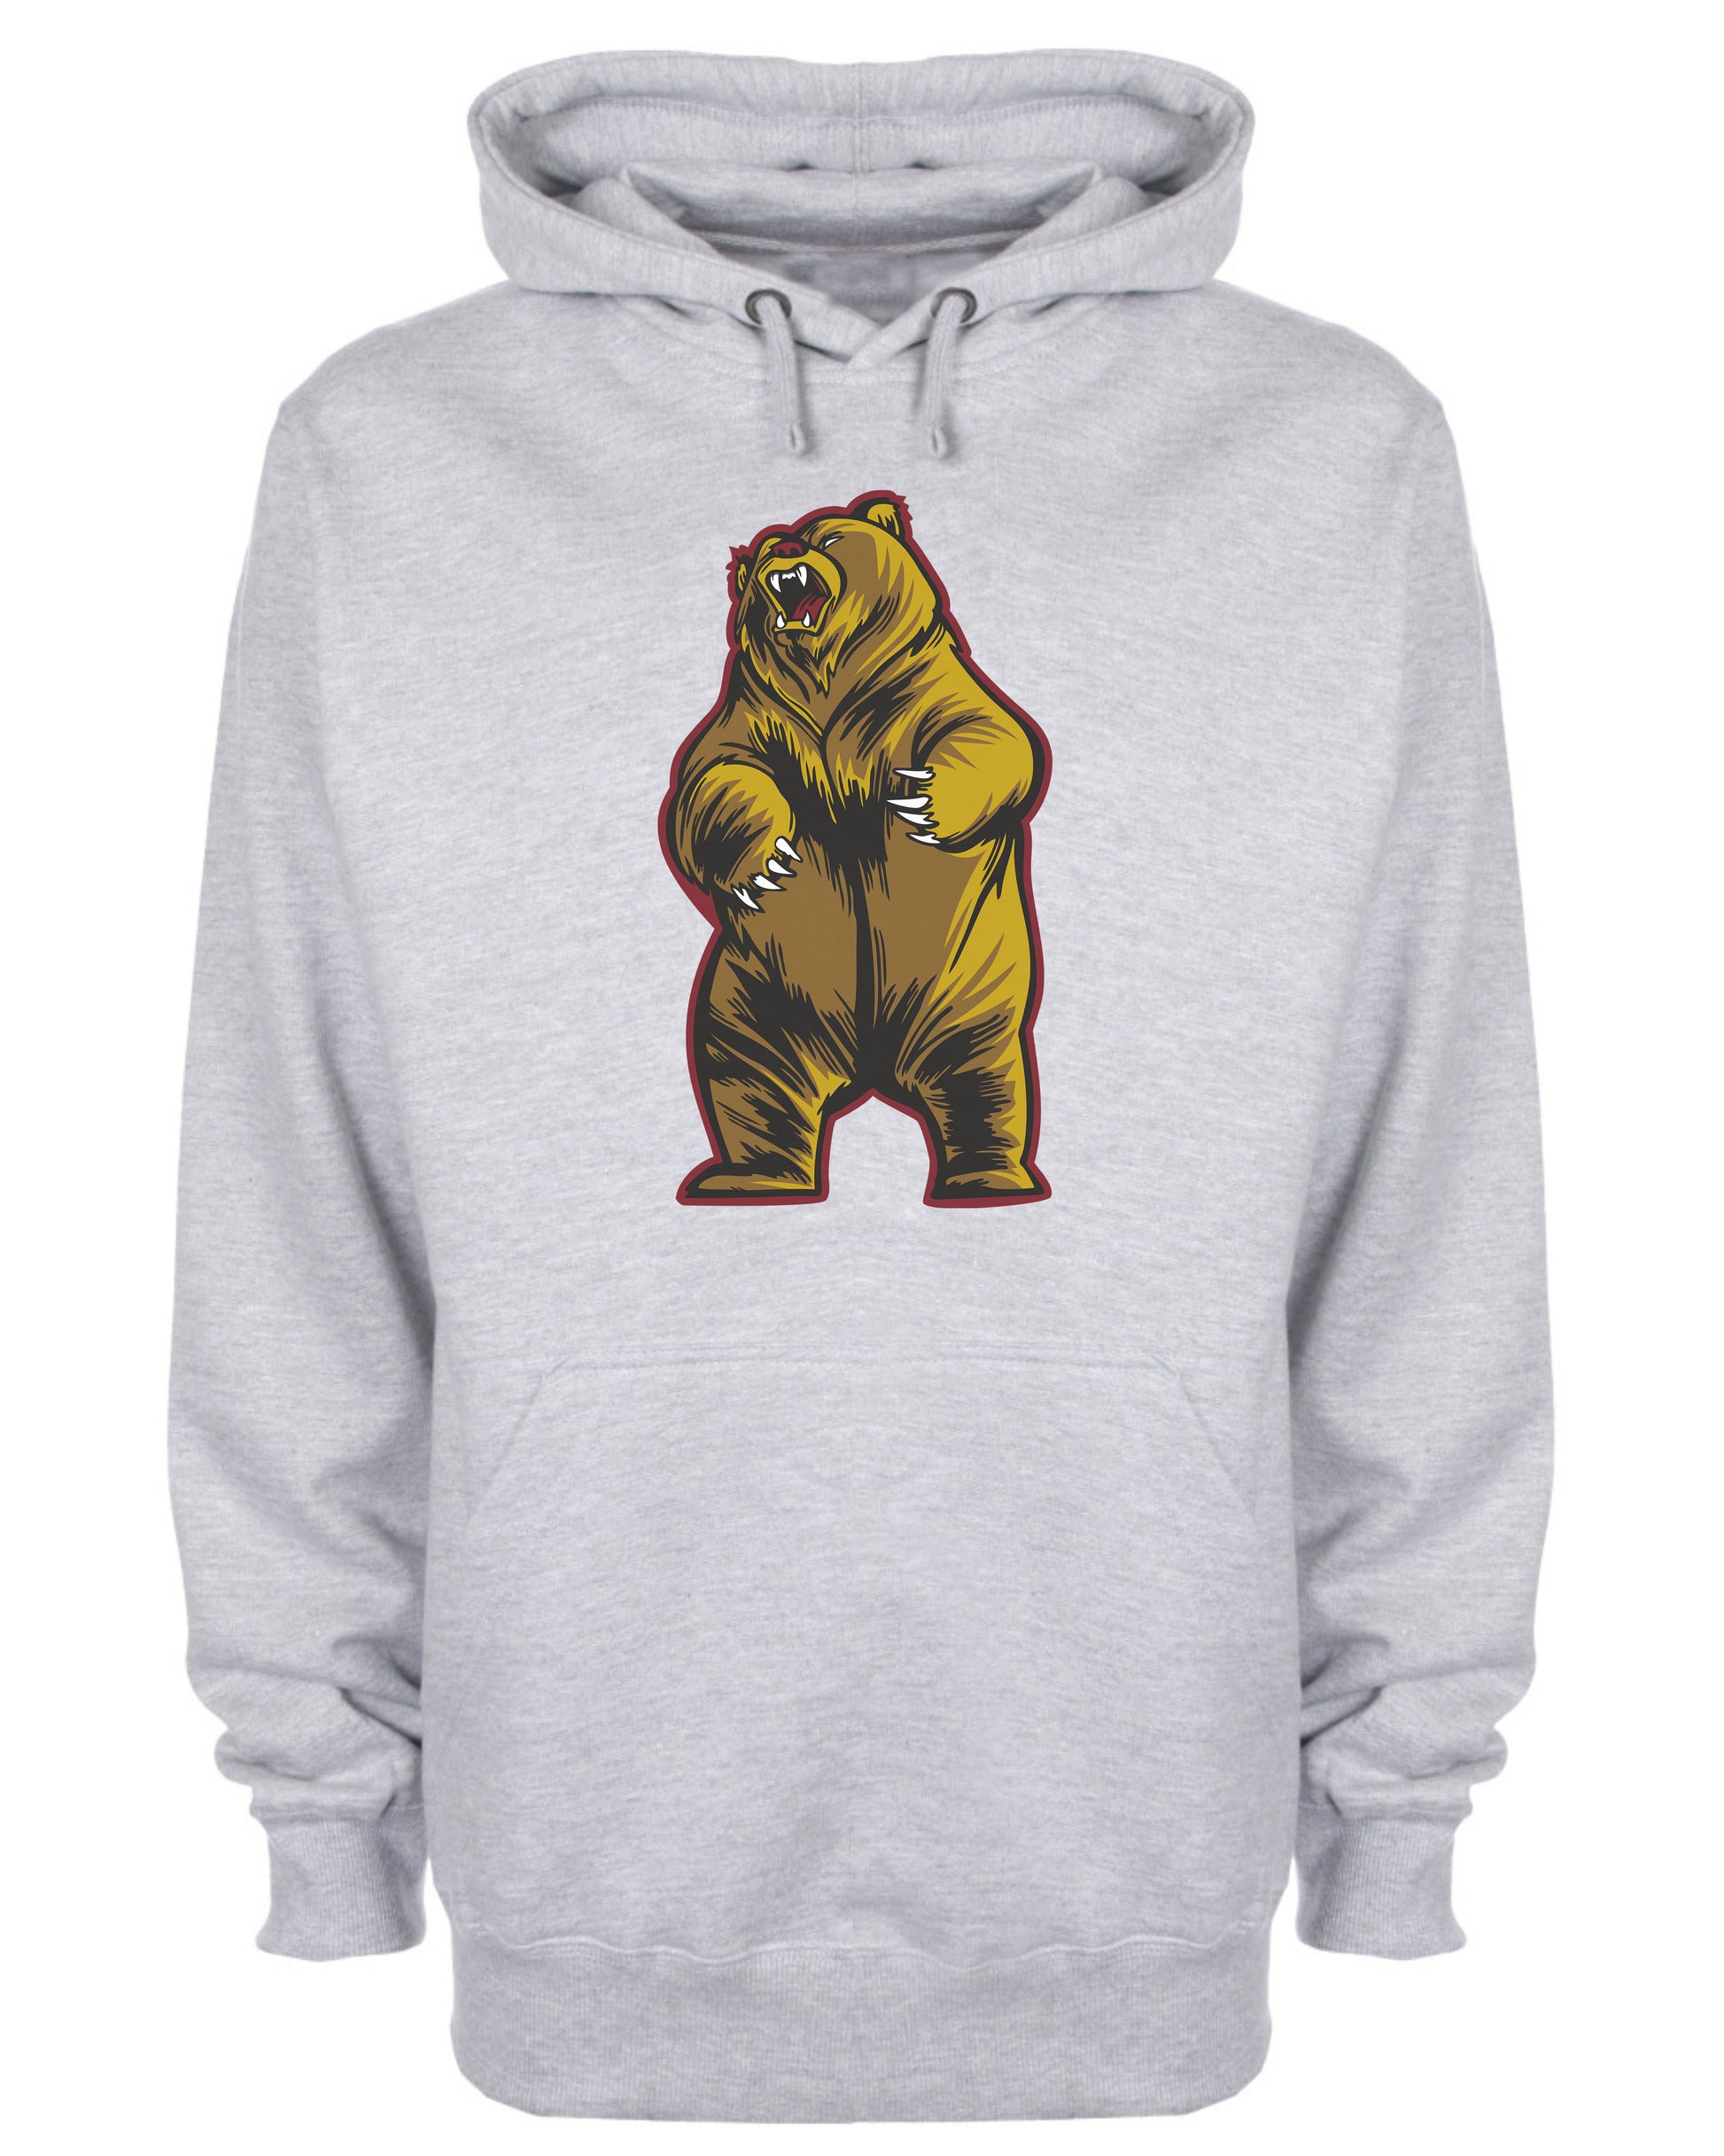 Angry Bear Character Hooded Sweatshirt